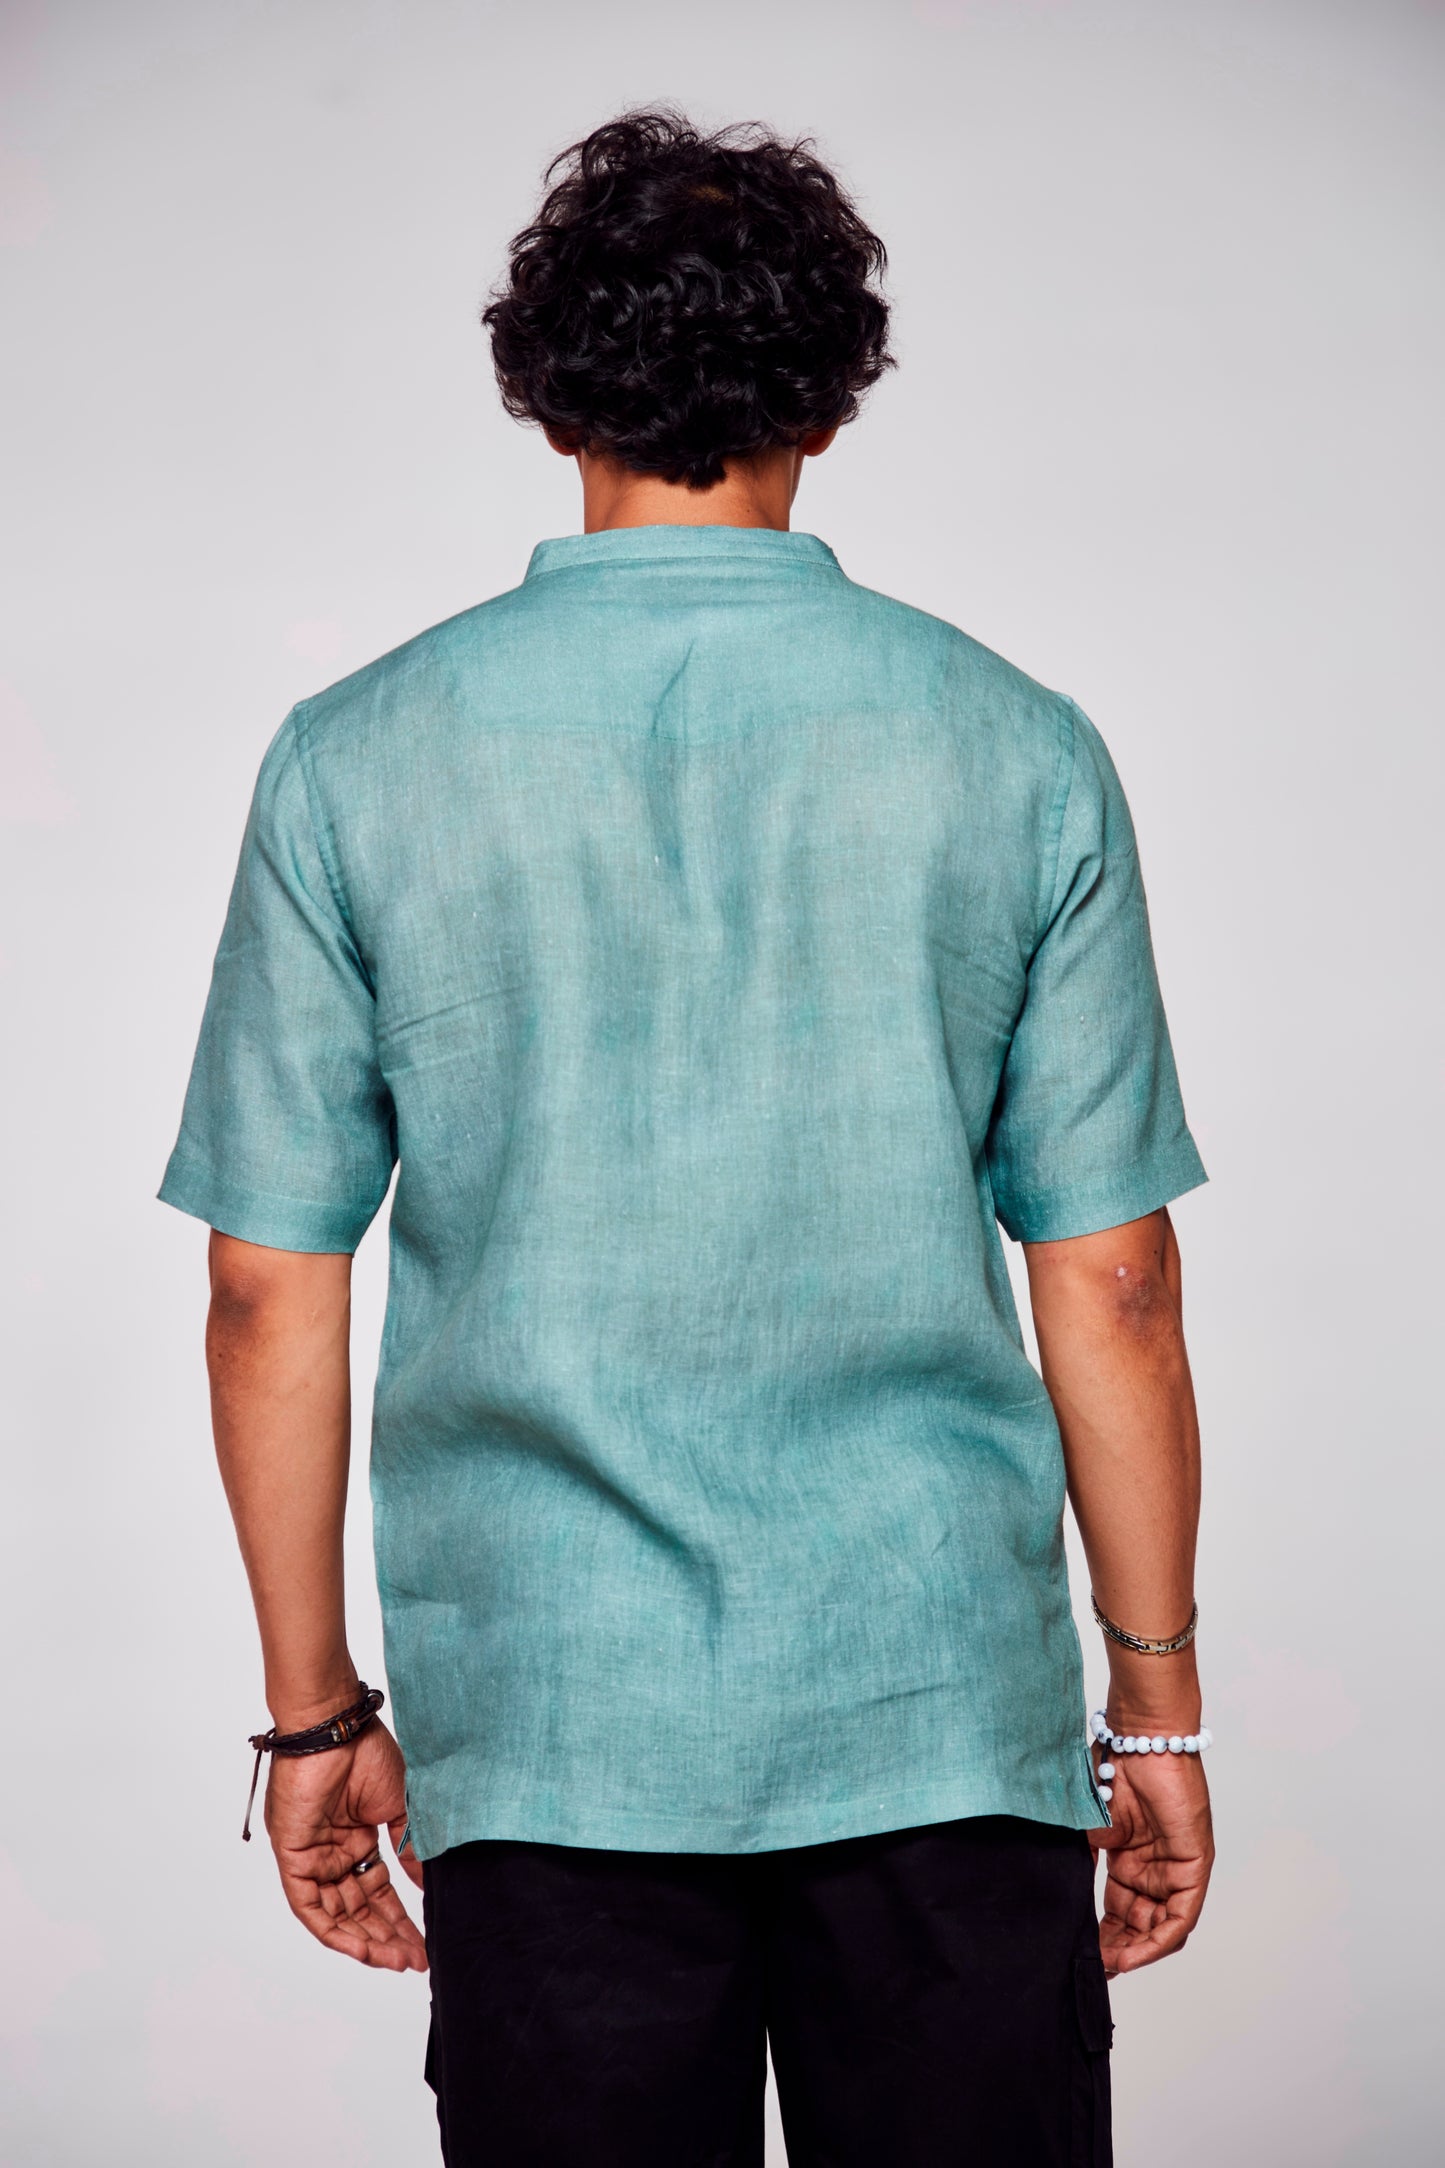 Feminine Fusion : Blending Technology and Beauty - Pure Linen Short Sleeve Shirt